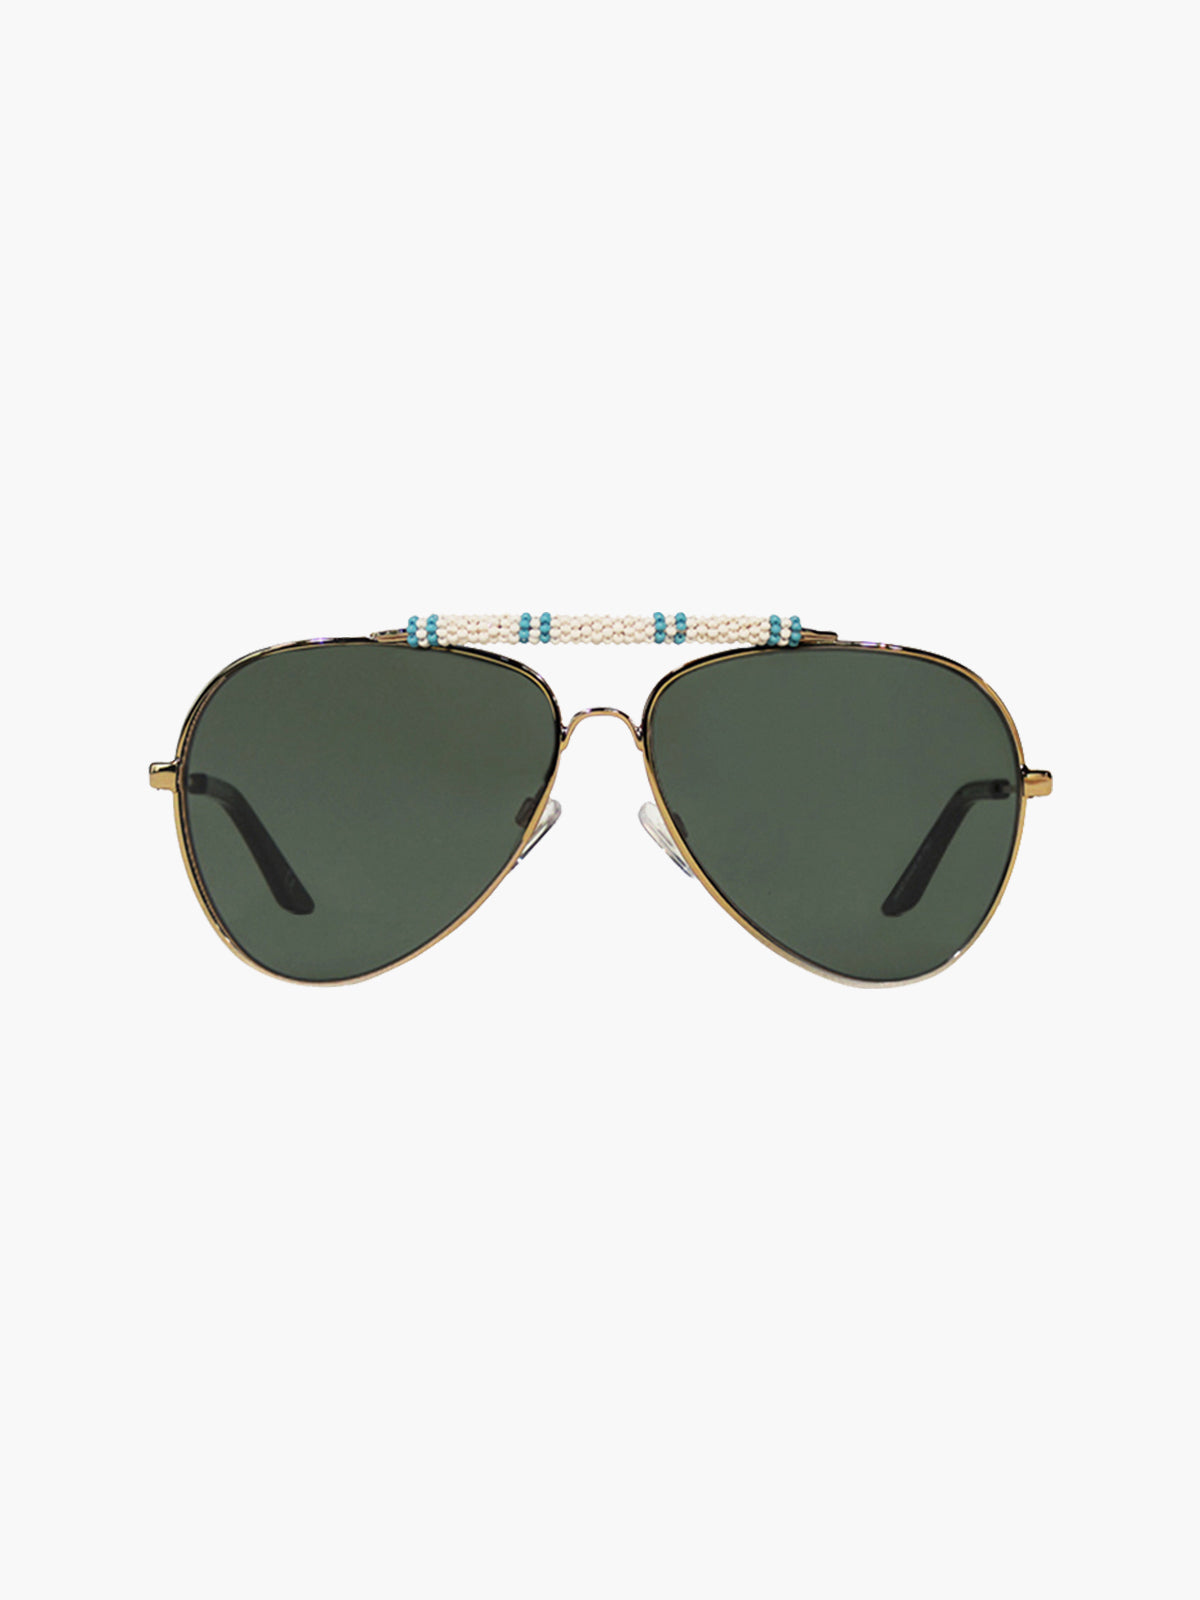 Exclusive Sunglasses | White/Light Blue - Fashionkind